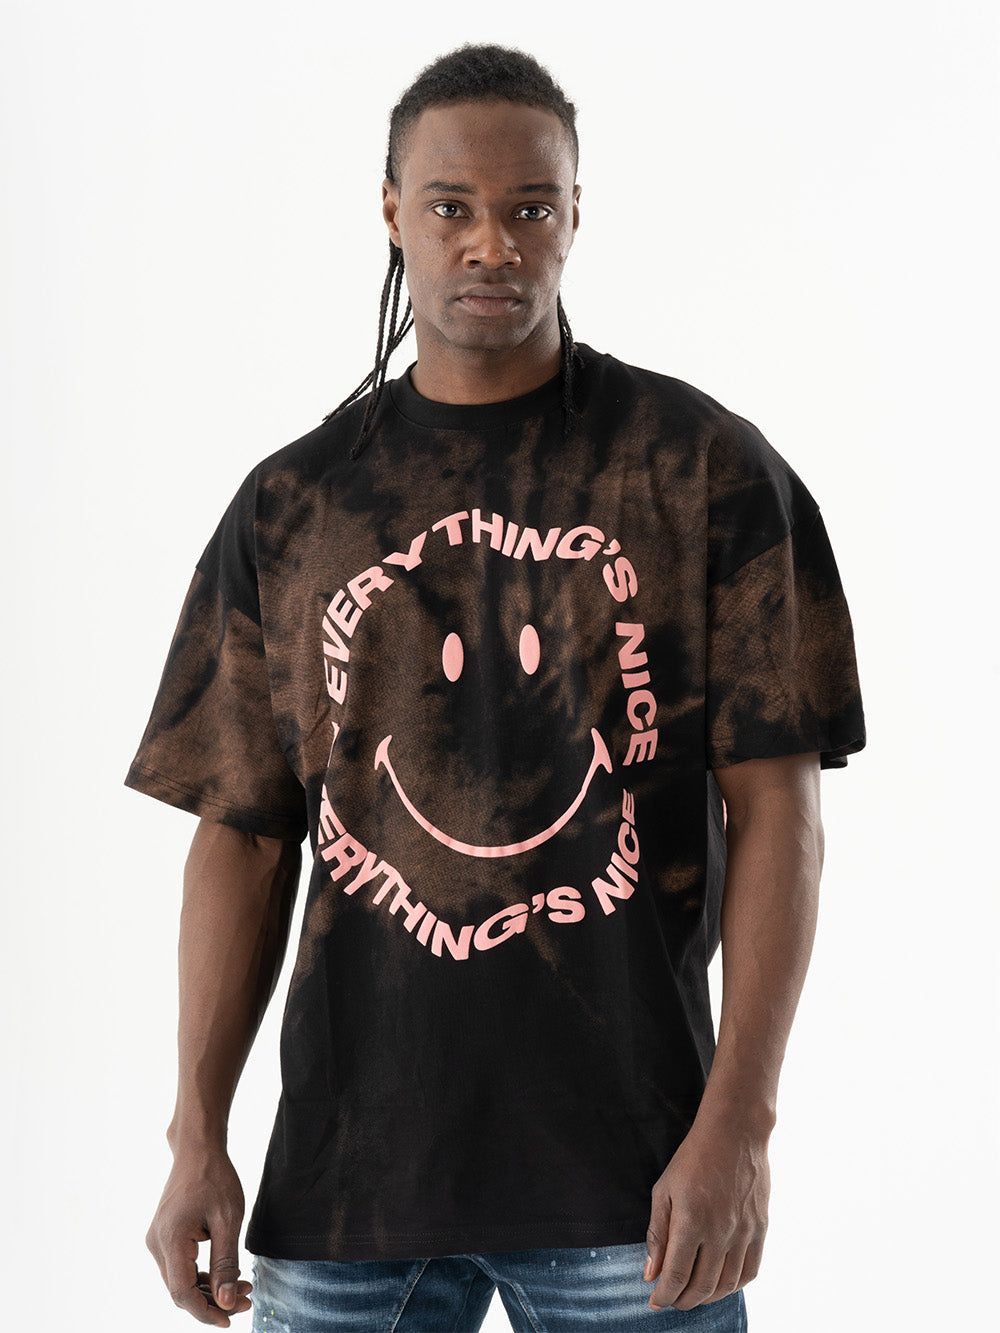 A man wearing an Optimist T-Shirt with a smiley face batik effect.